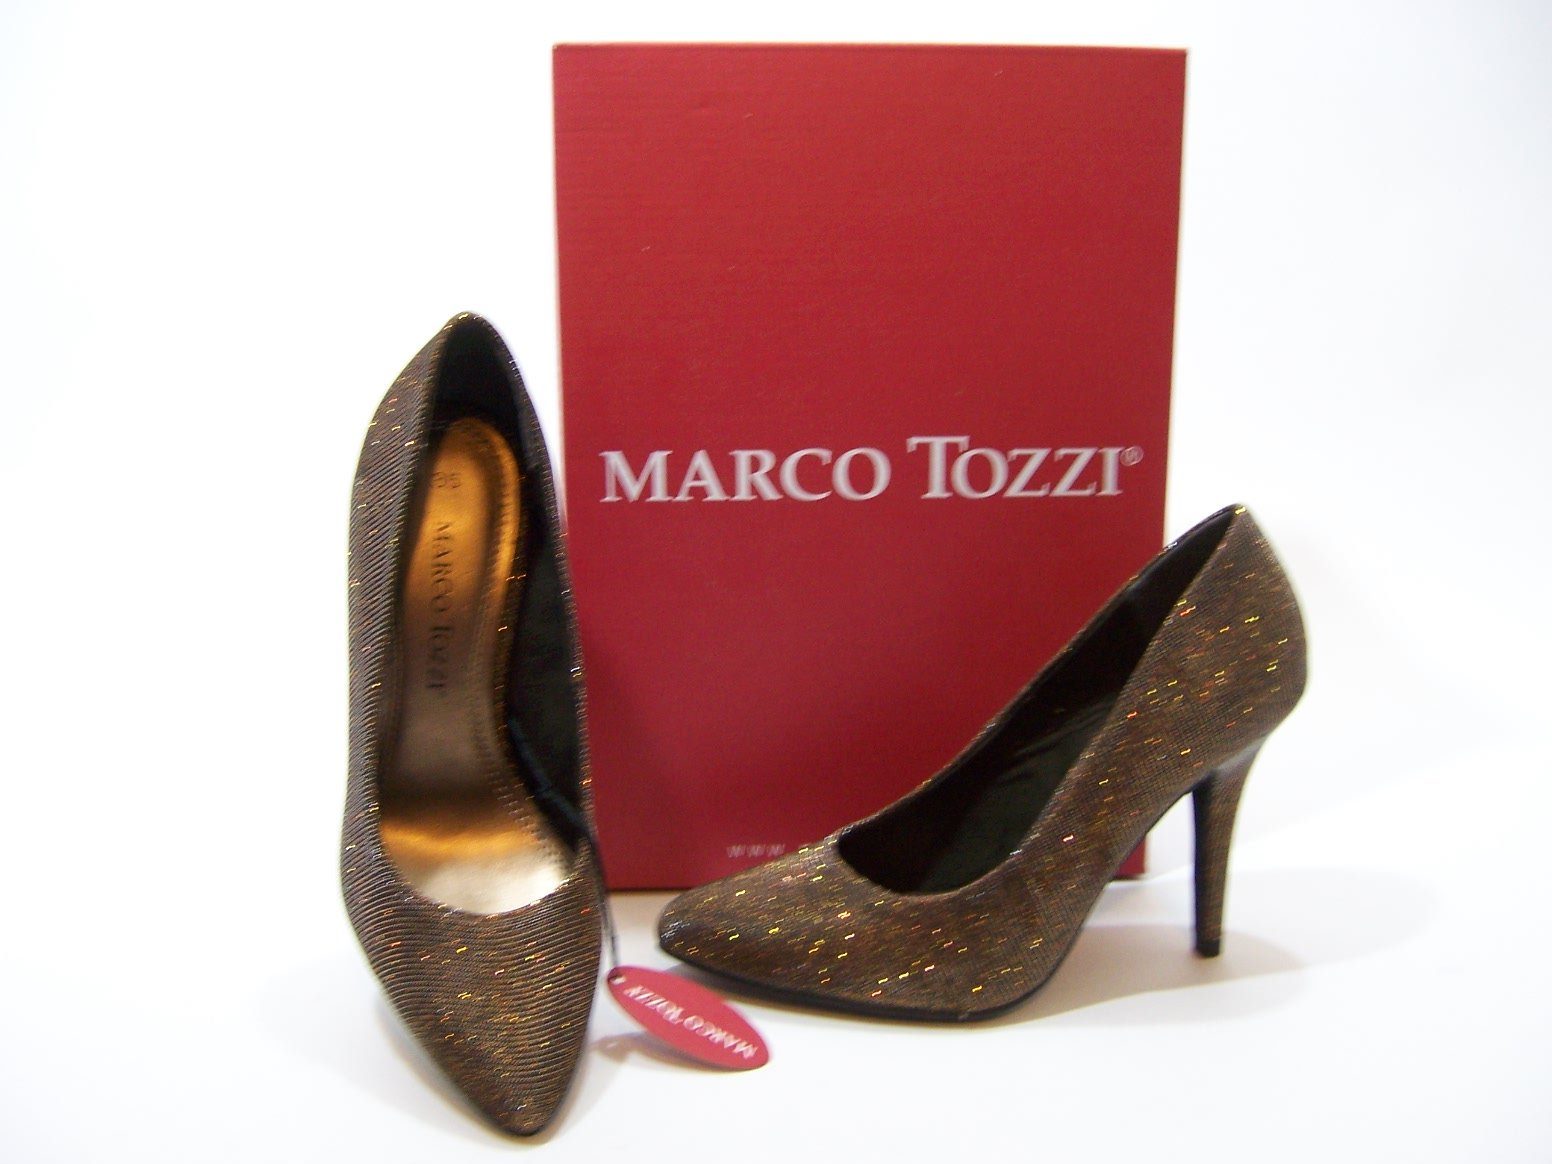 MARCO TOZZI Marco Tozzi High Heel 10cm glitzer Pumps